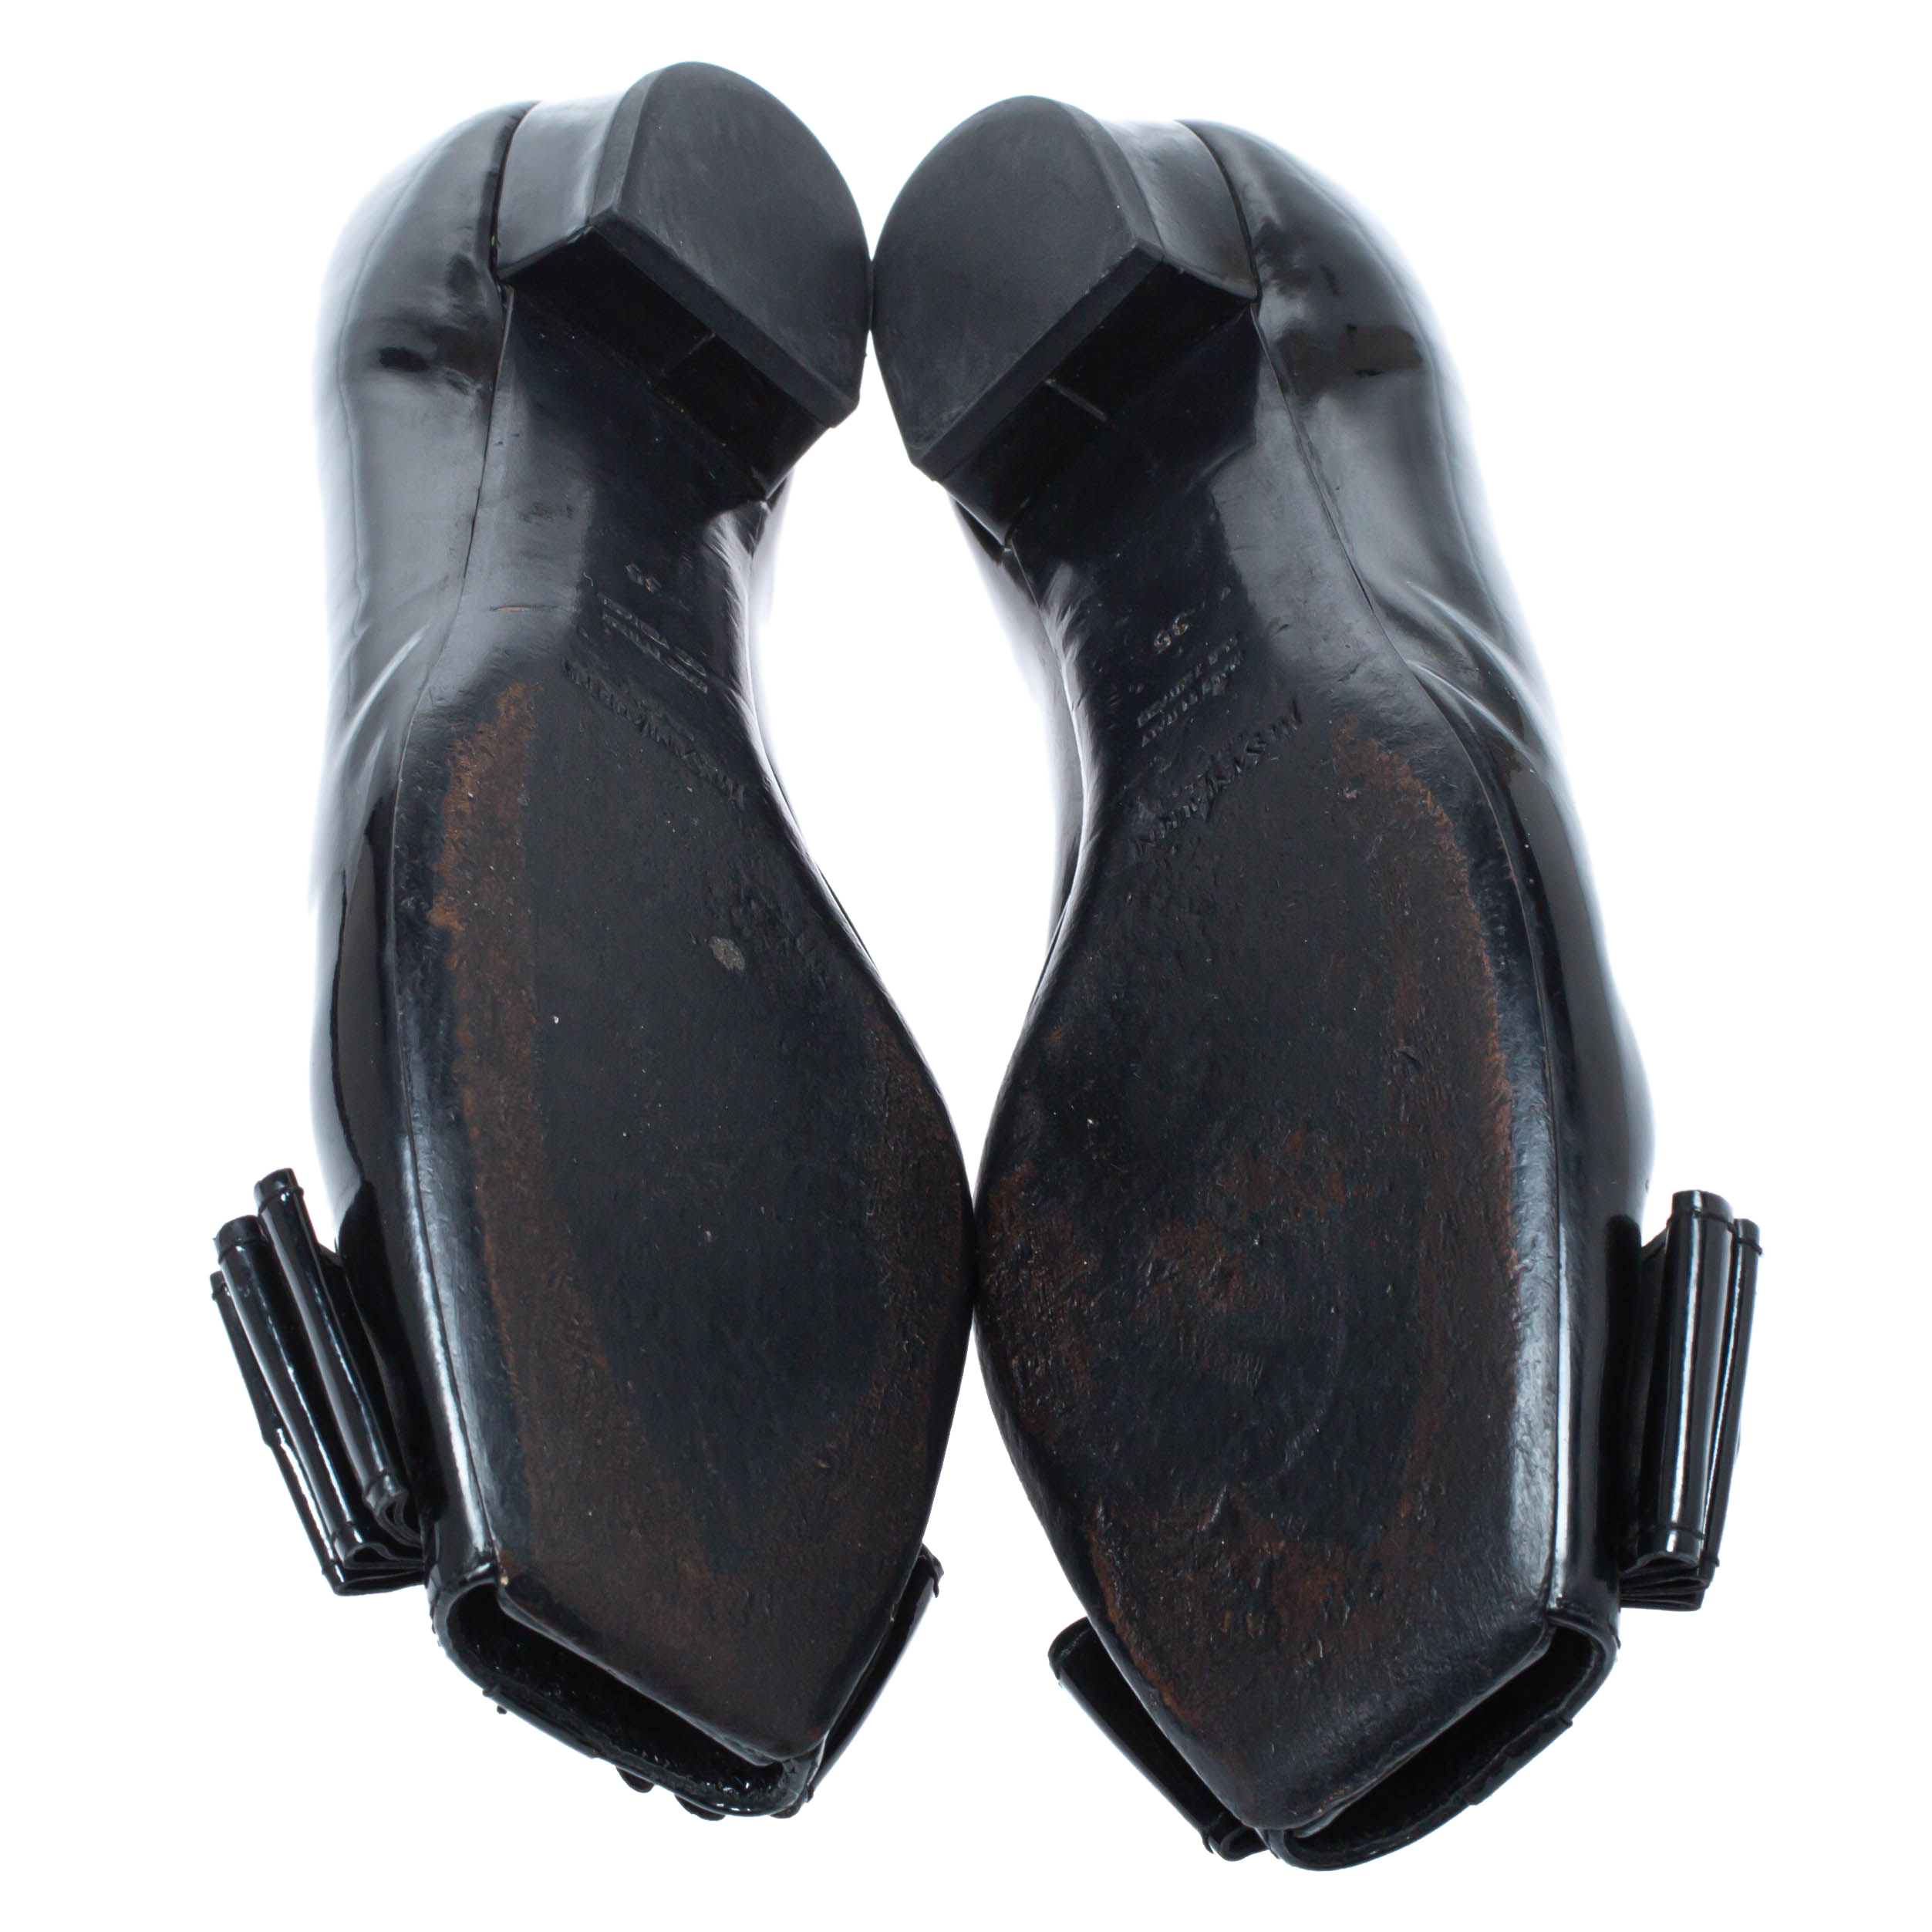 Yves Saint Laurent Black Patent Leather Bow Peep Toe Ballet Flat Size 35